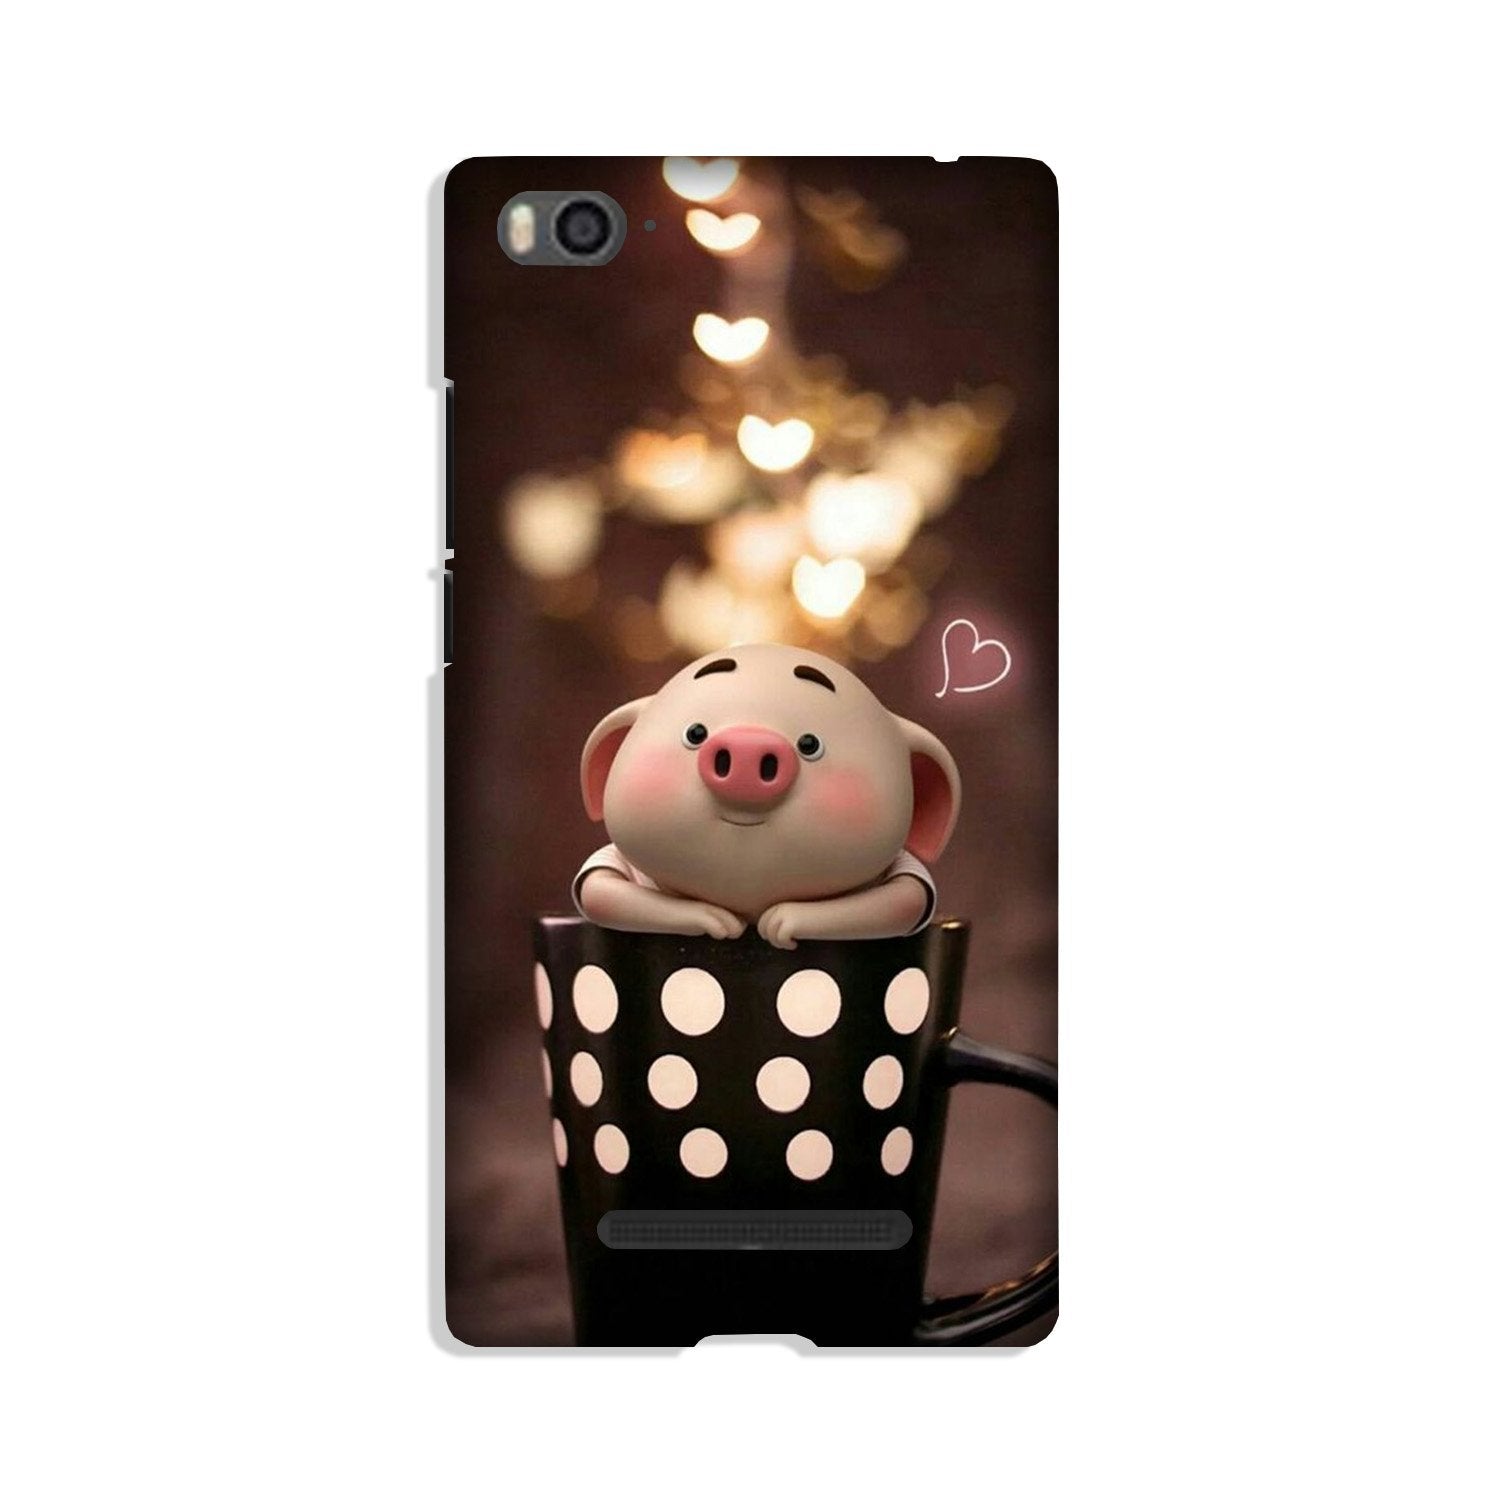 Cute Bunny Case for Xiaomi Mi 4i (Design No. 213)